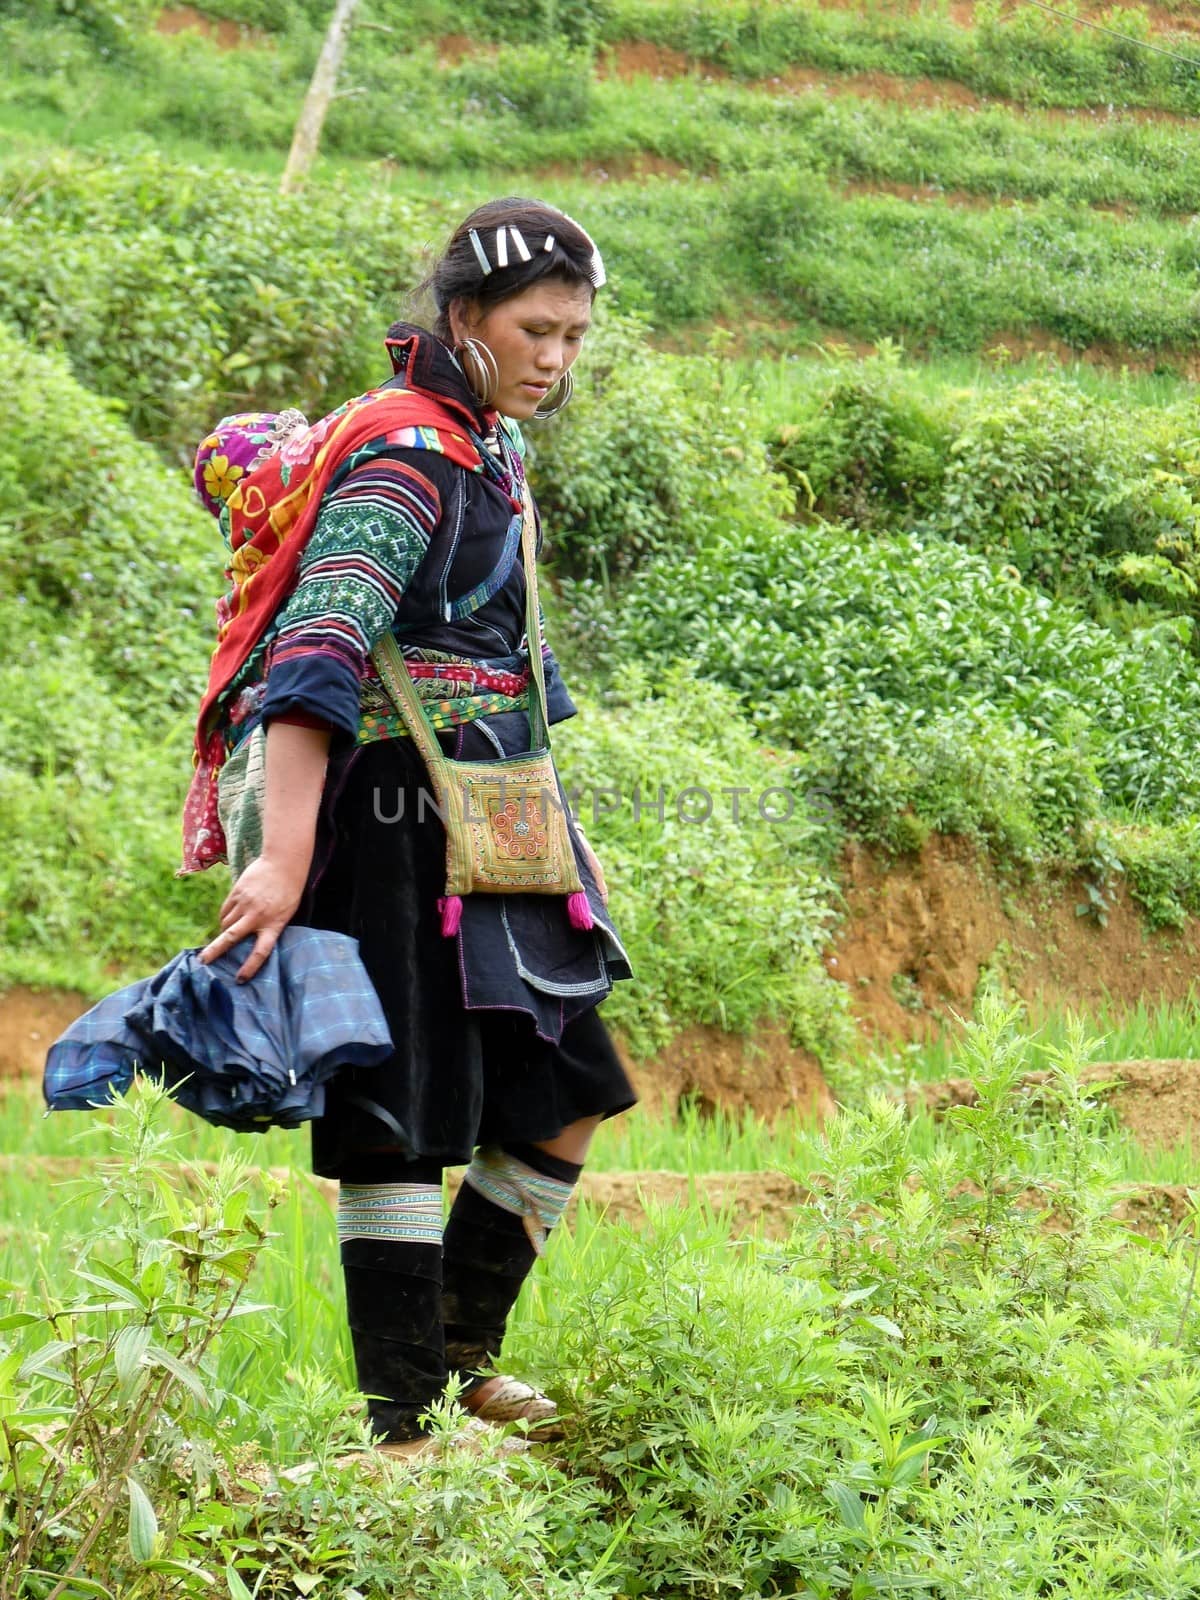 Hmong woman by nicousnake